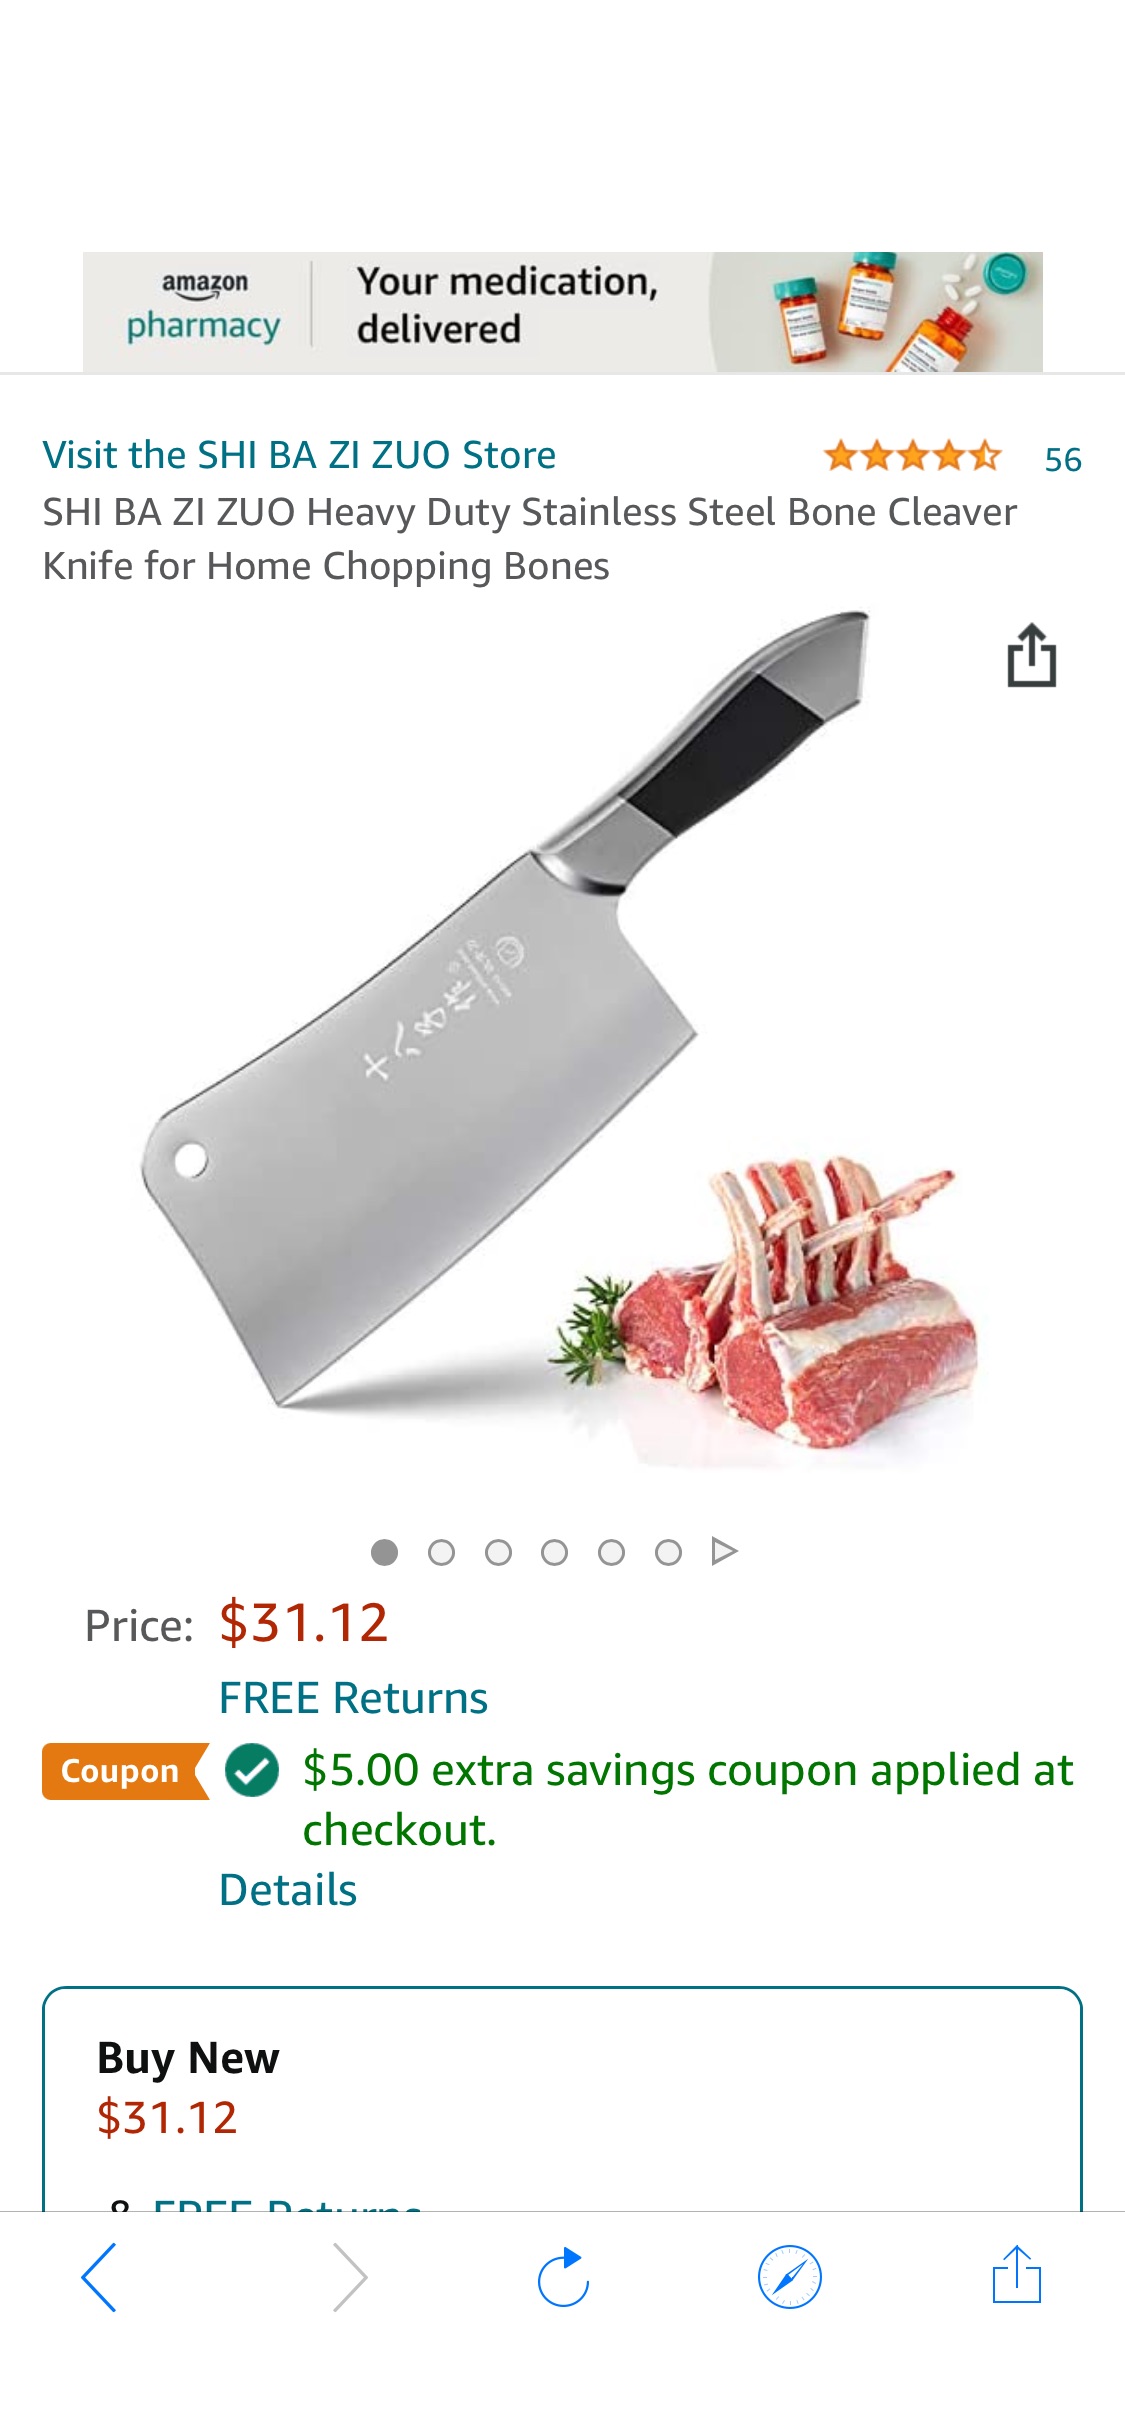 Amazon.com: 十八子剁骨刀SHI BA ZI ZUO Heavy Duty Stainless Steel Bone Cleaver Knife for Home Chopping Bones: Kitchen & Dining